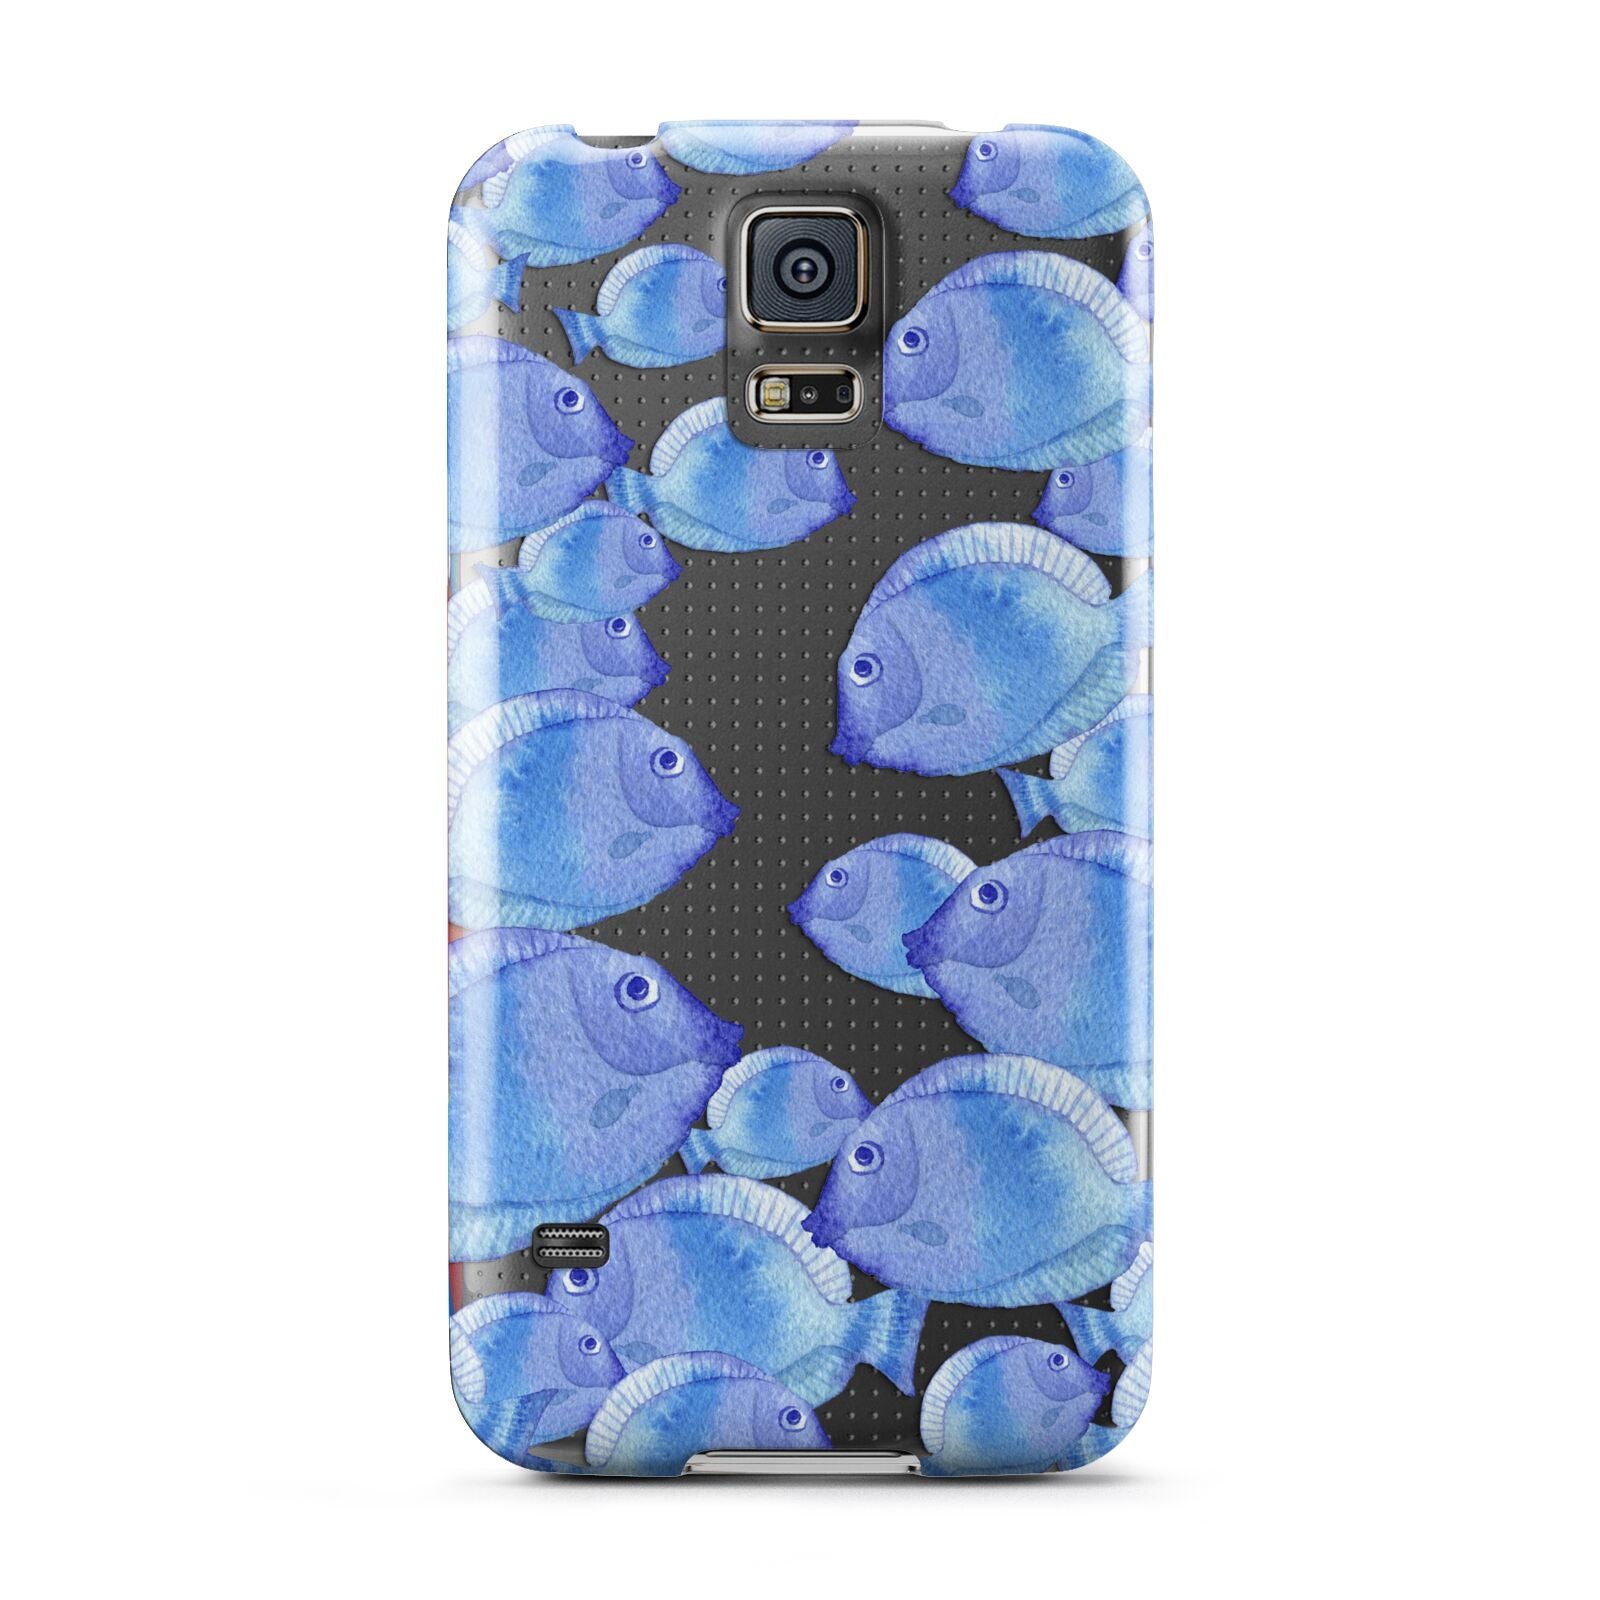 Fish Samsung Galaxy S5 Case